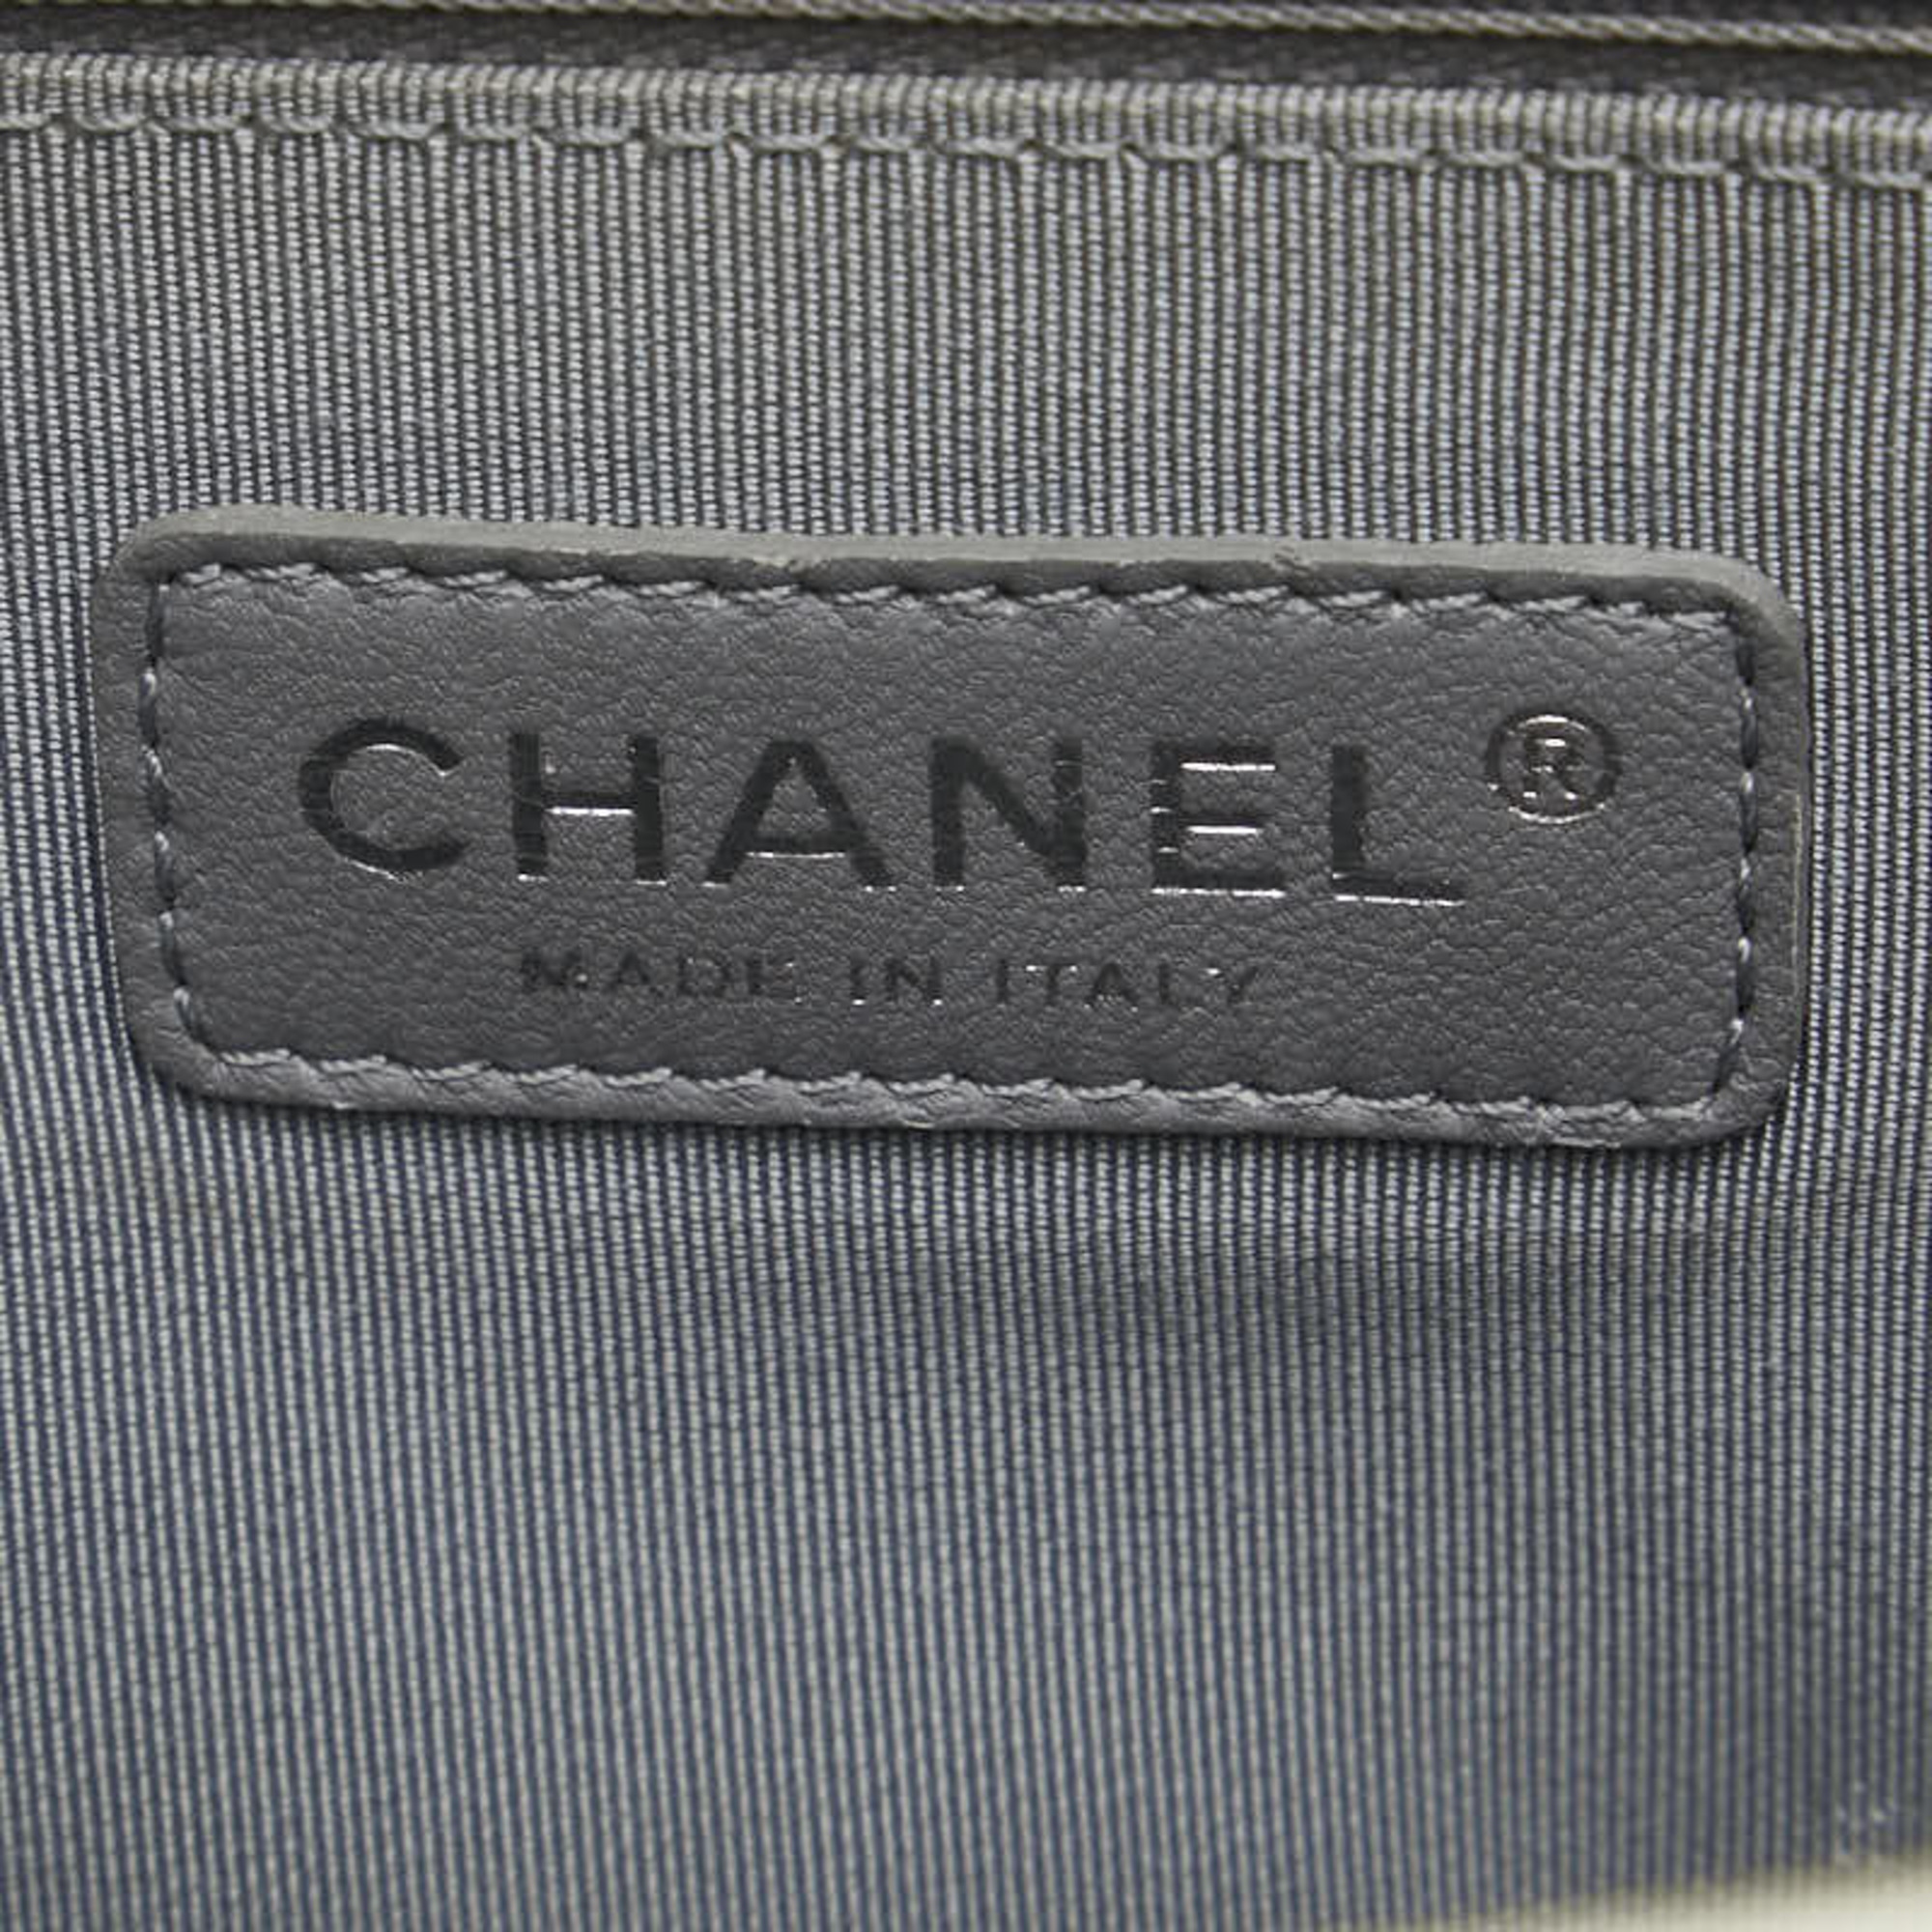 CHANEL Boy Chanel Coco Mark Chain Shoulder Bag White Enamel Women's